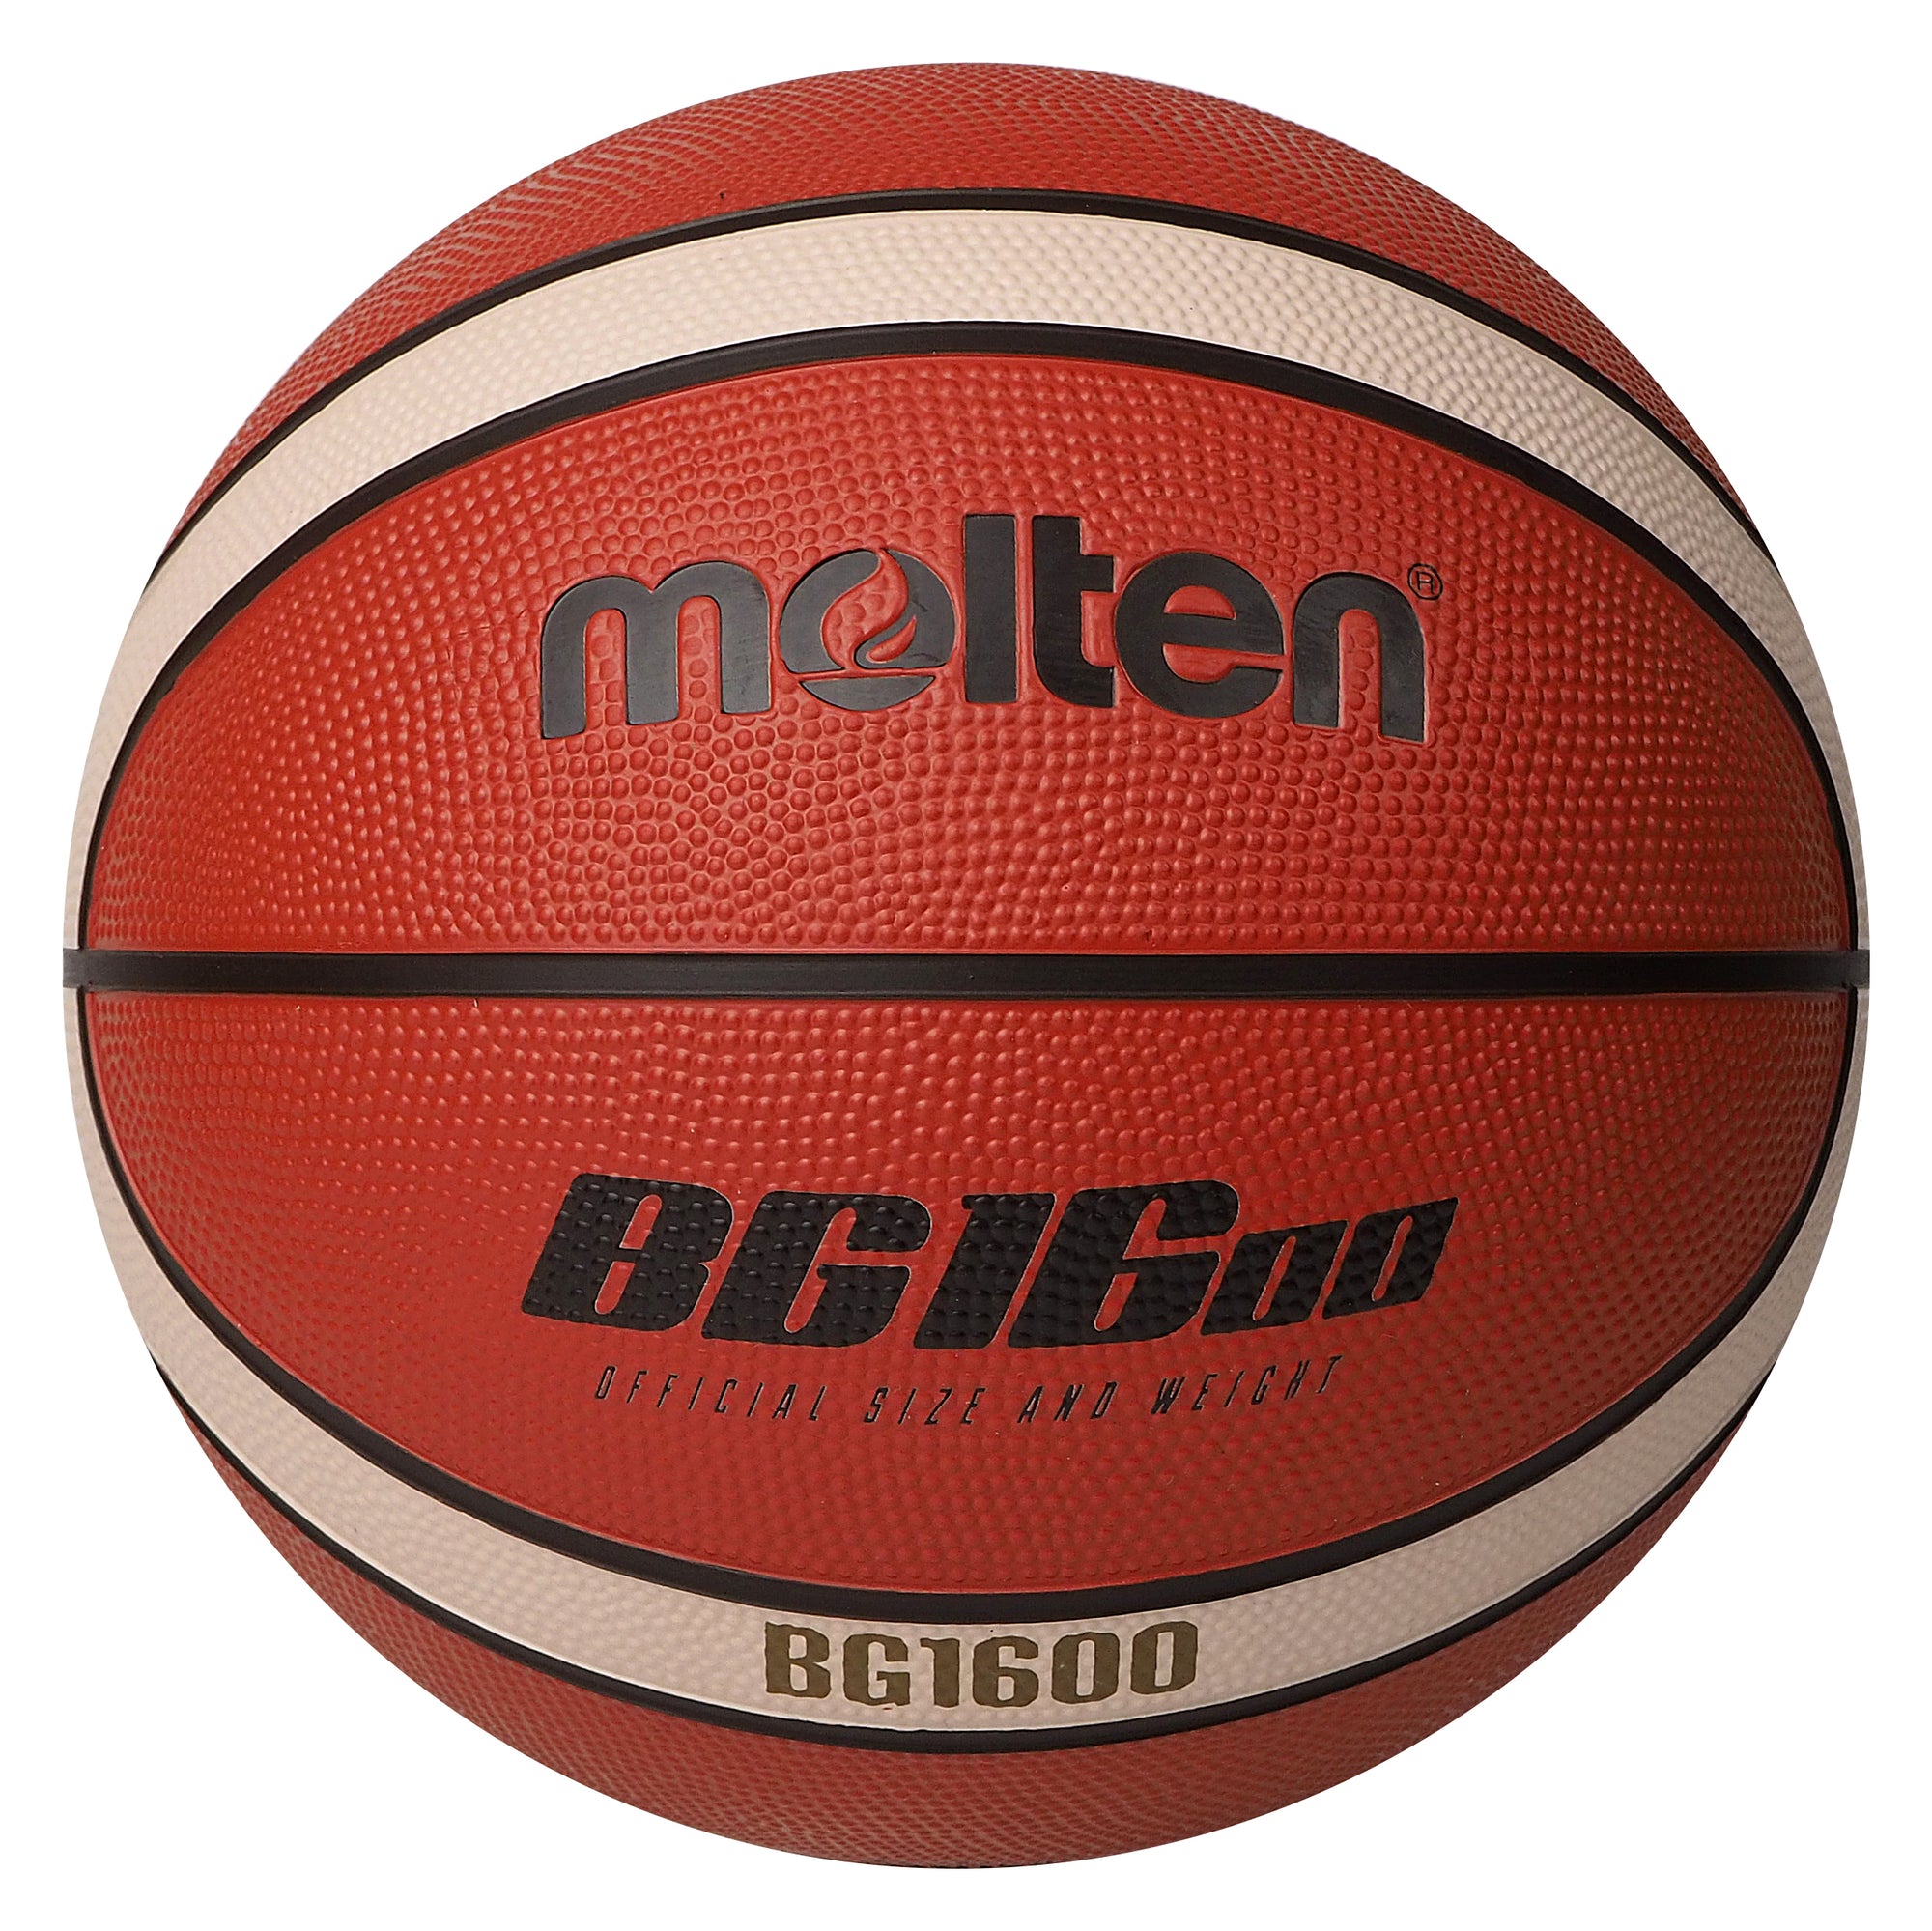 BG1600 Series Basketball